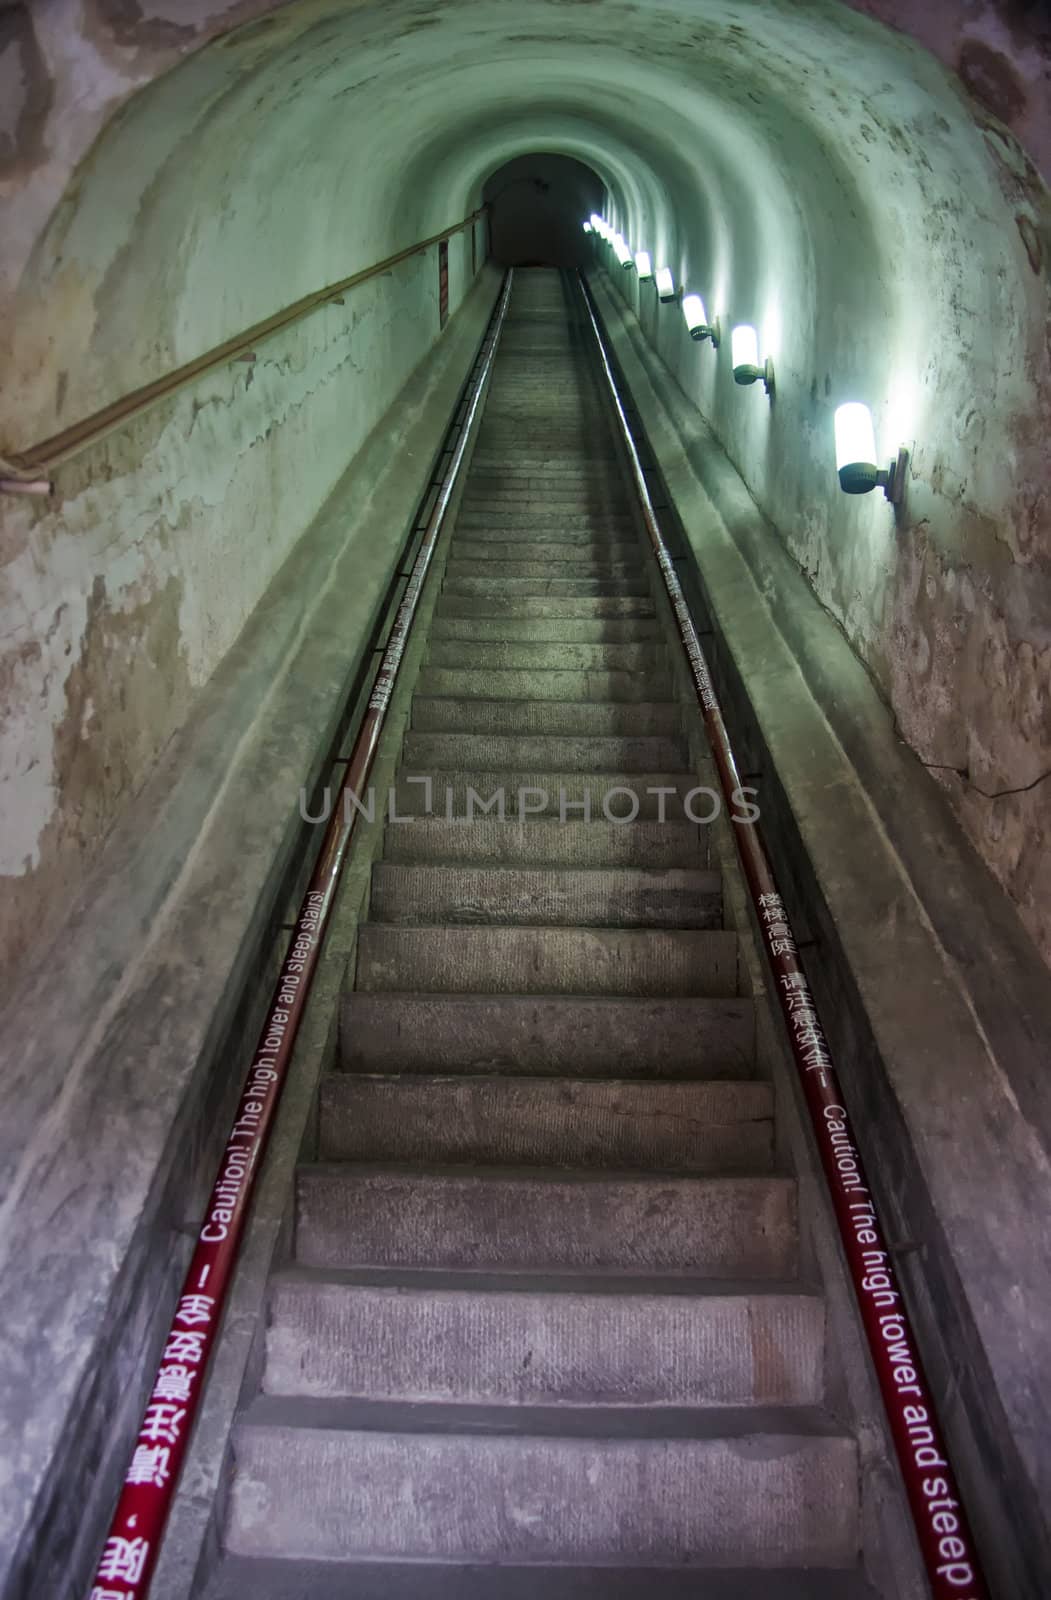 Beijing longest flight of stairs. by Claudine